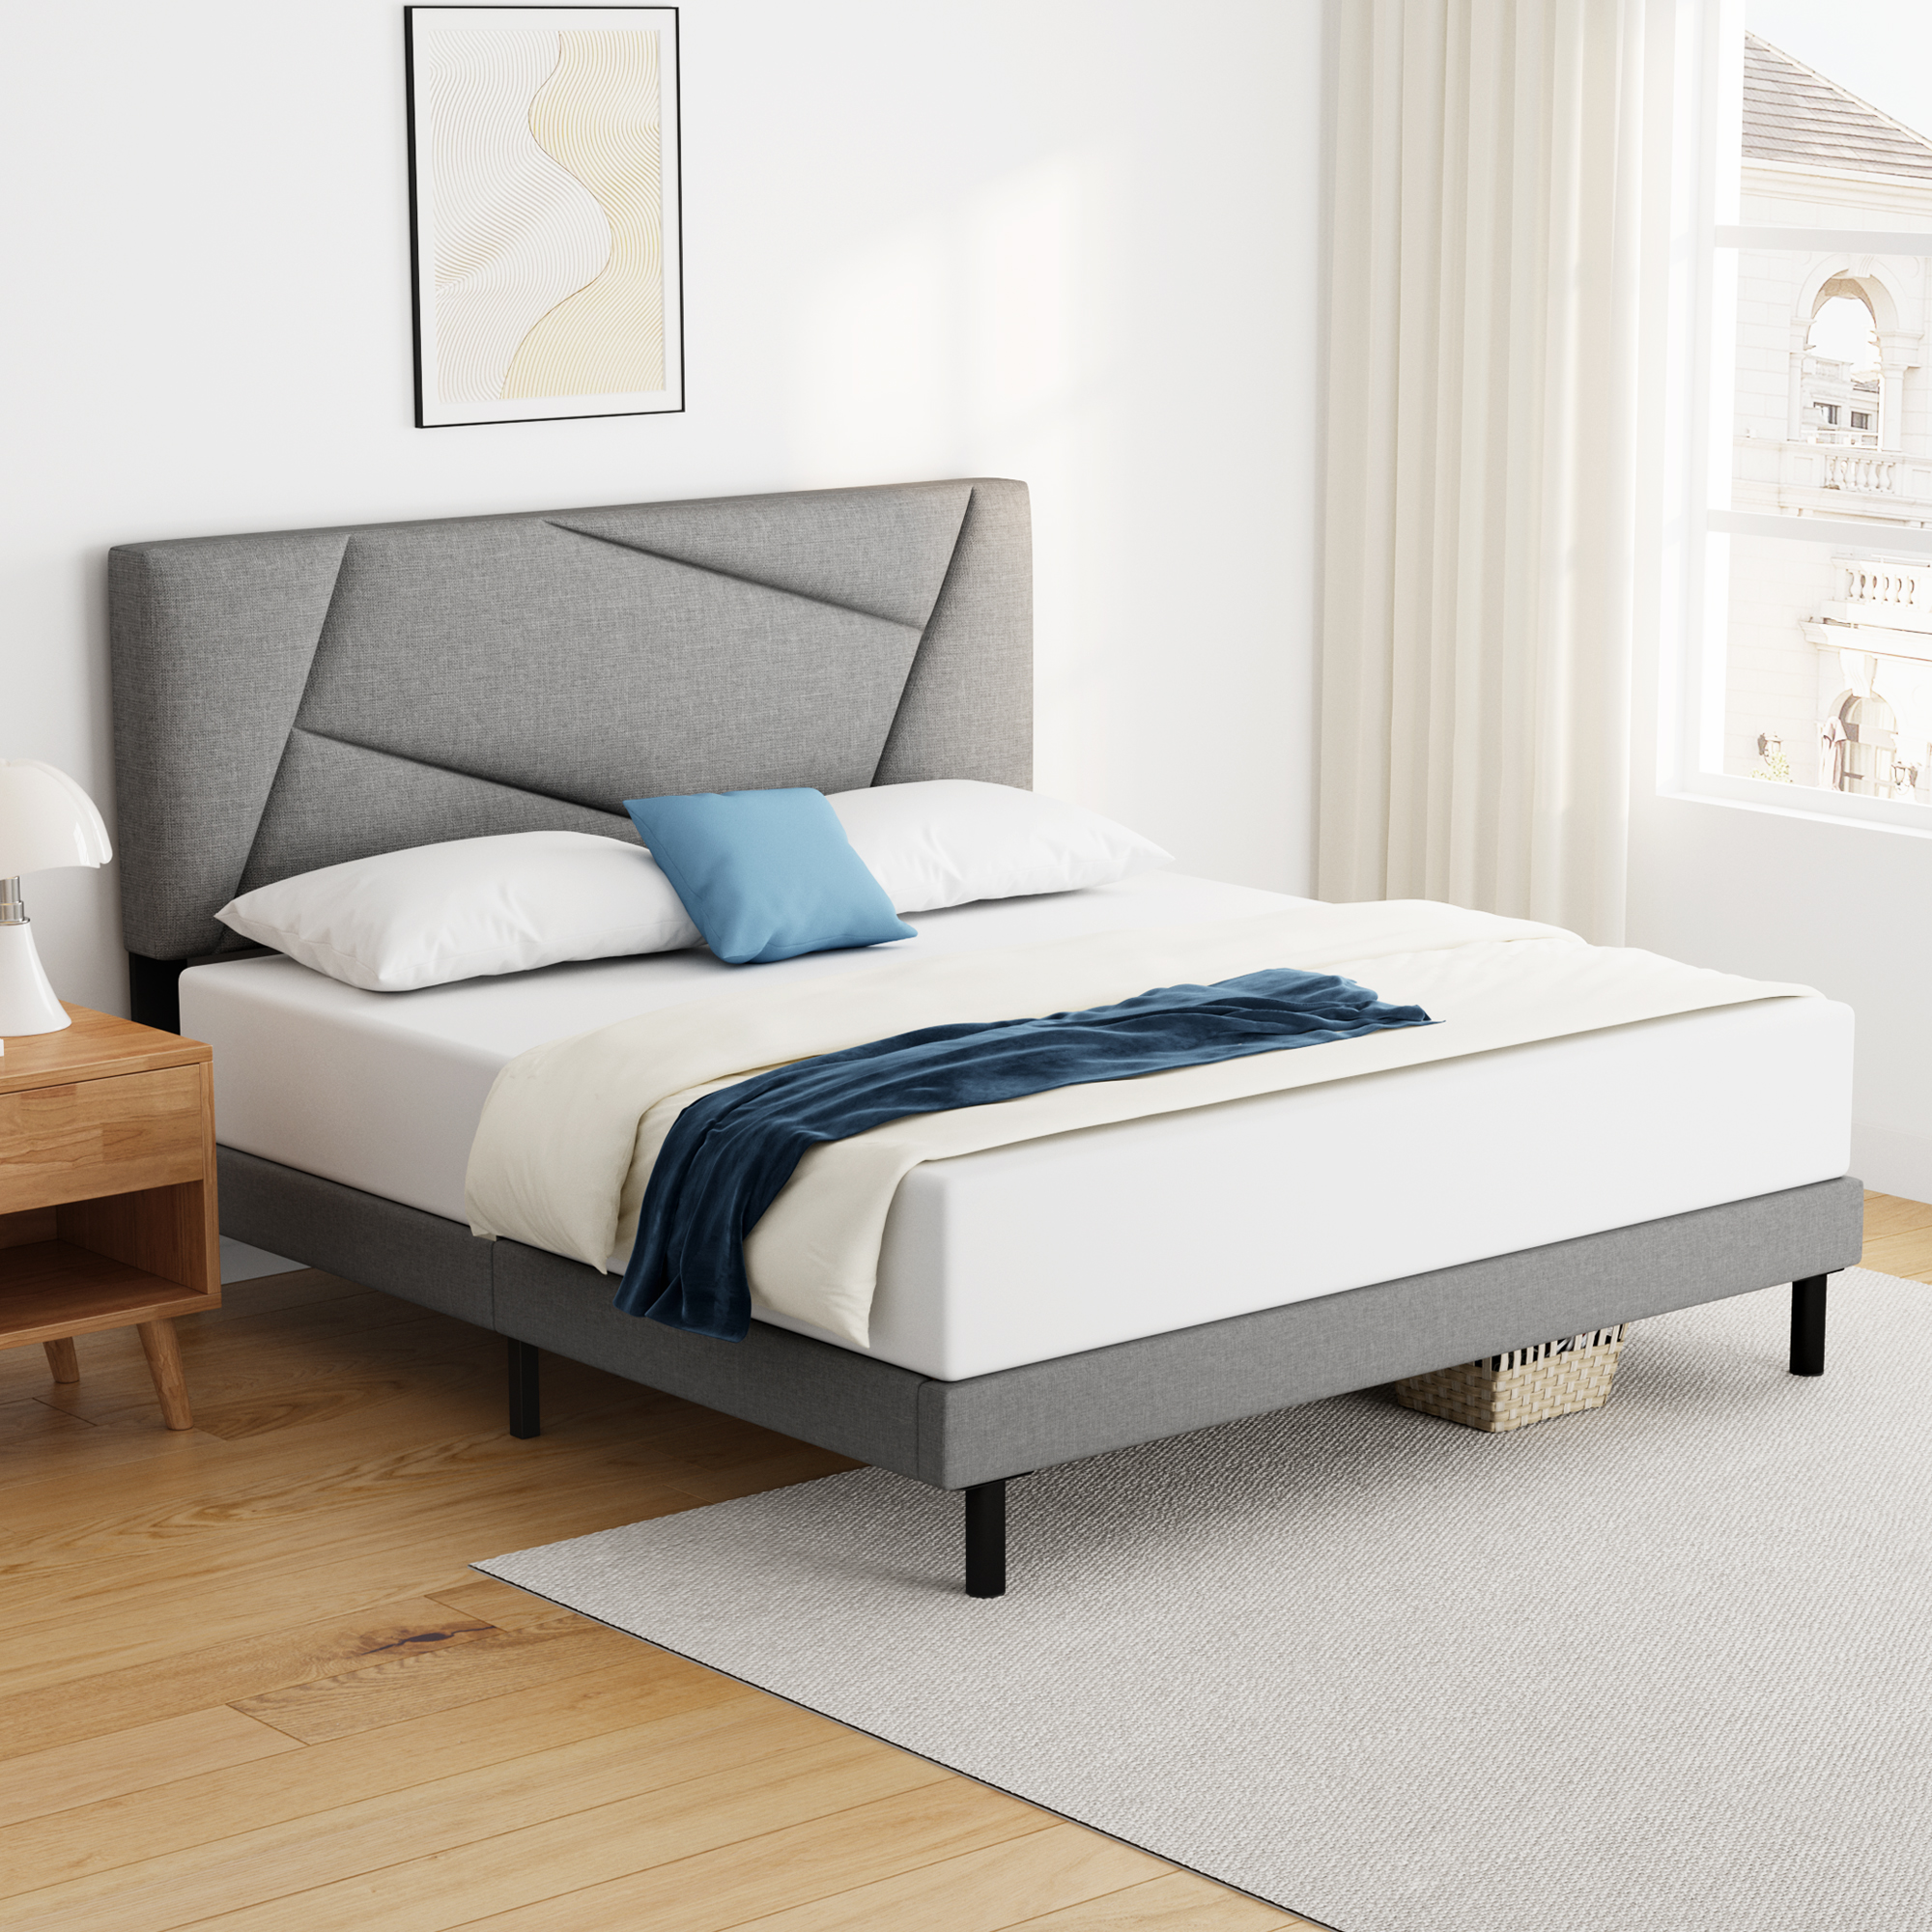 Full Bed Frame, HAIIDE Full Size Platform Bed Frame with Fabric Upholstered Headboard, Light Grey - image 2 of 7